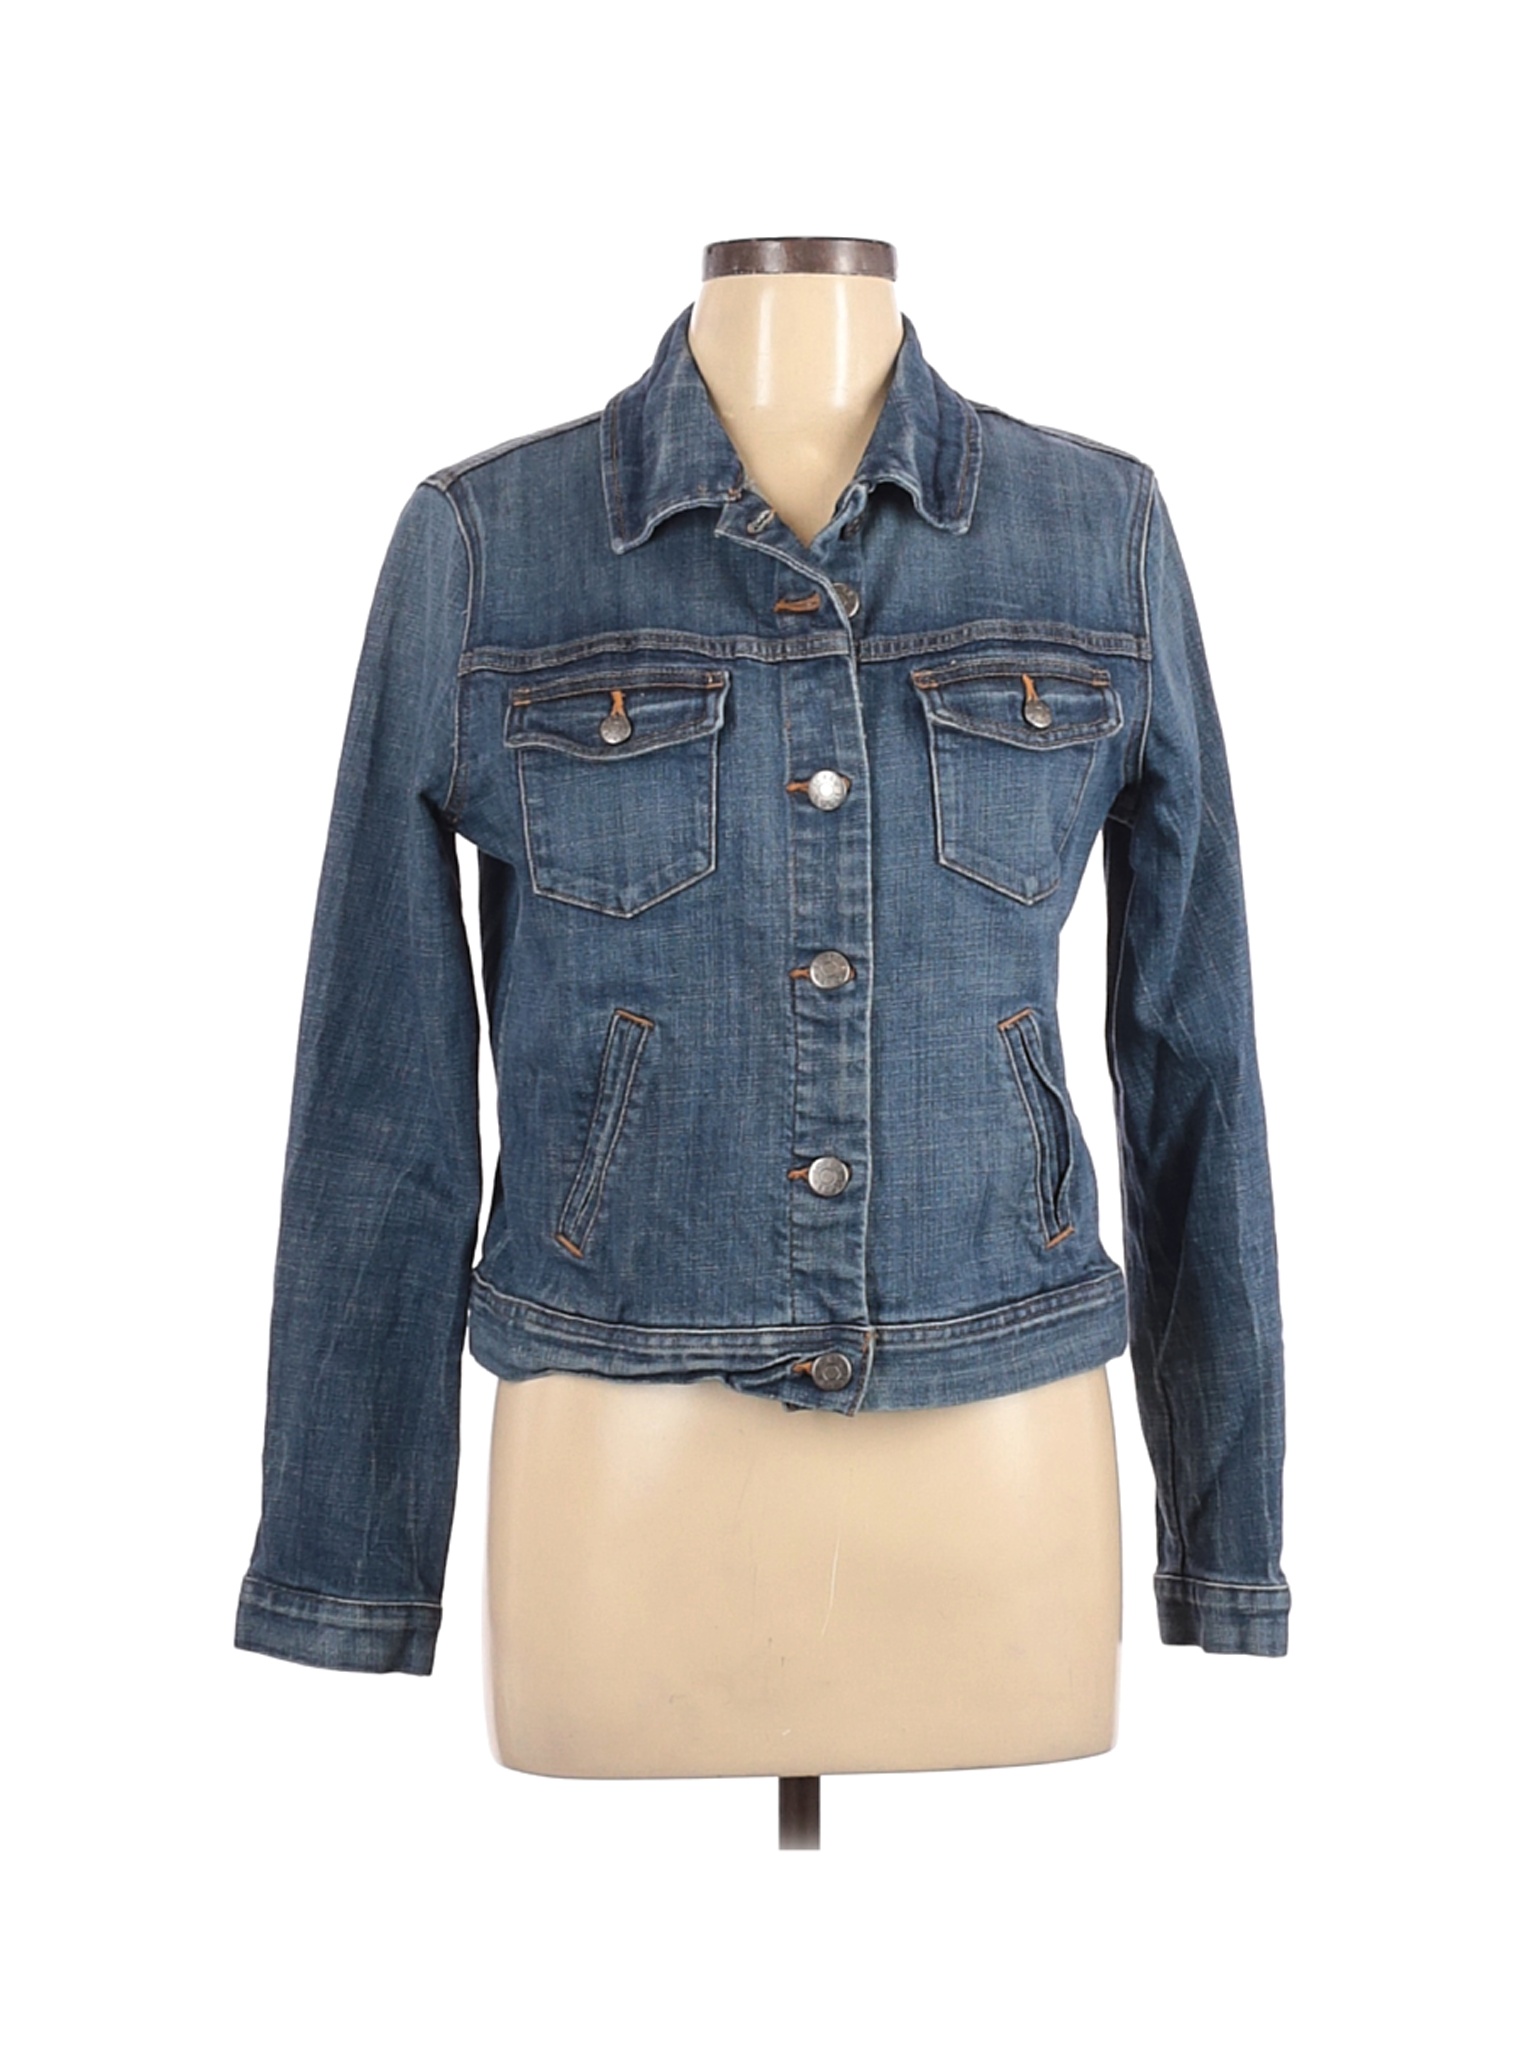 J.Crew Factory Store Women Blue Denim Jacket L | eBay